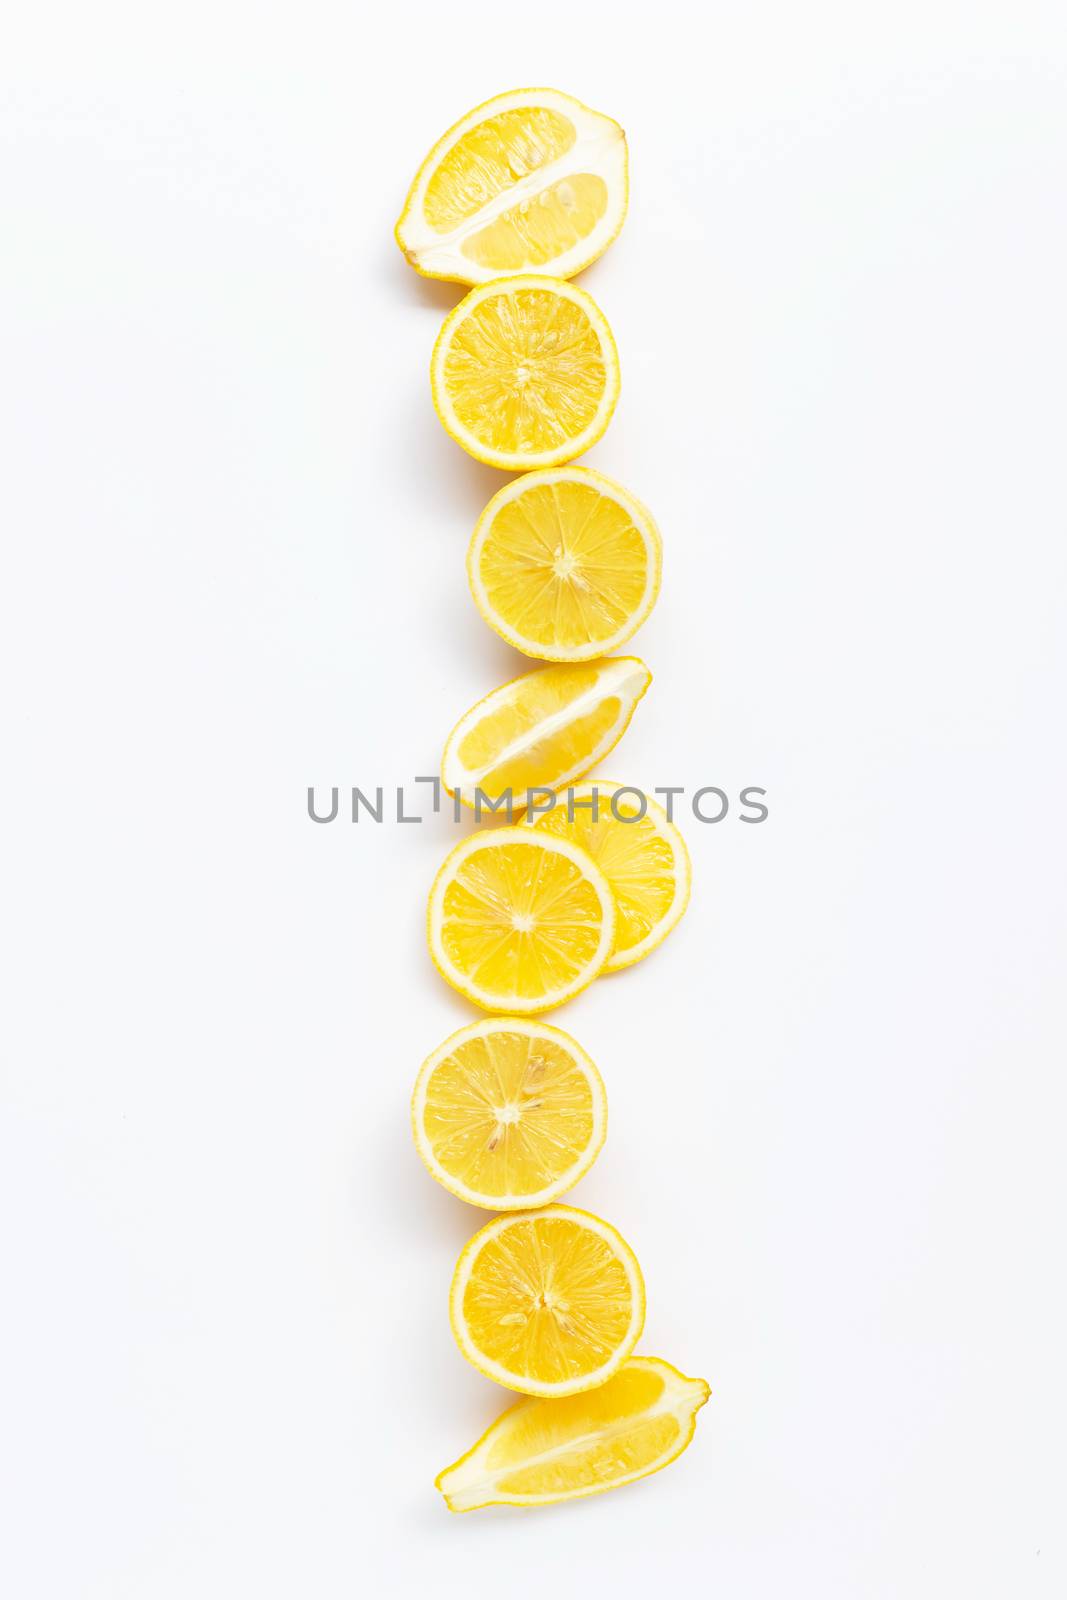 Fresh lemon slices on white background. by Bowonpat